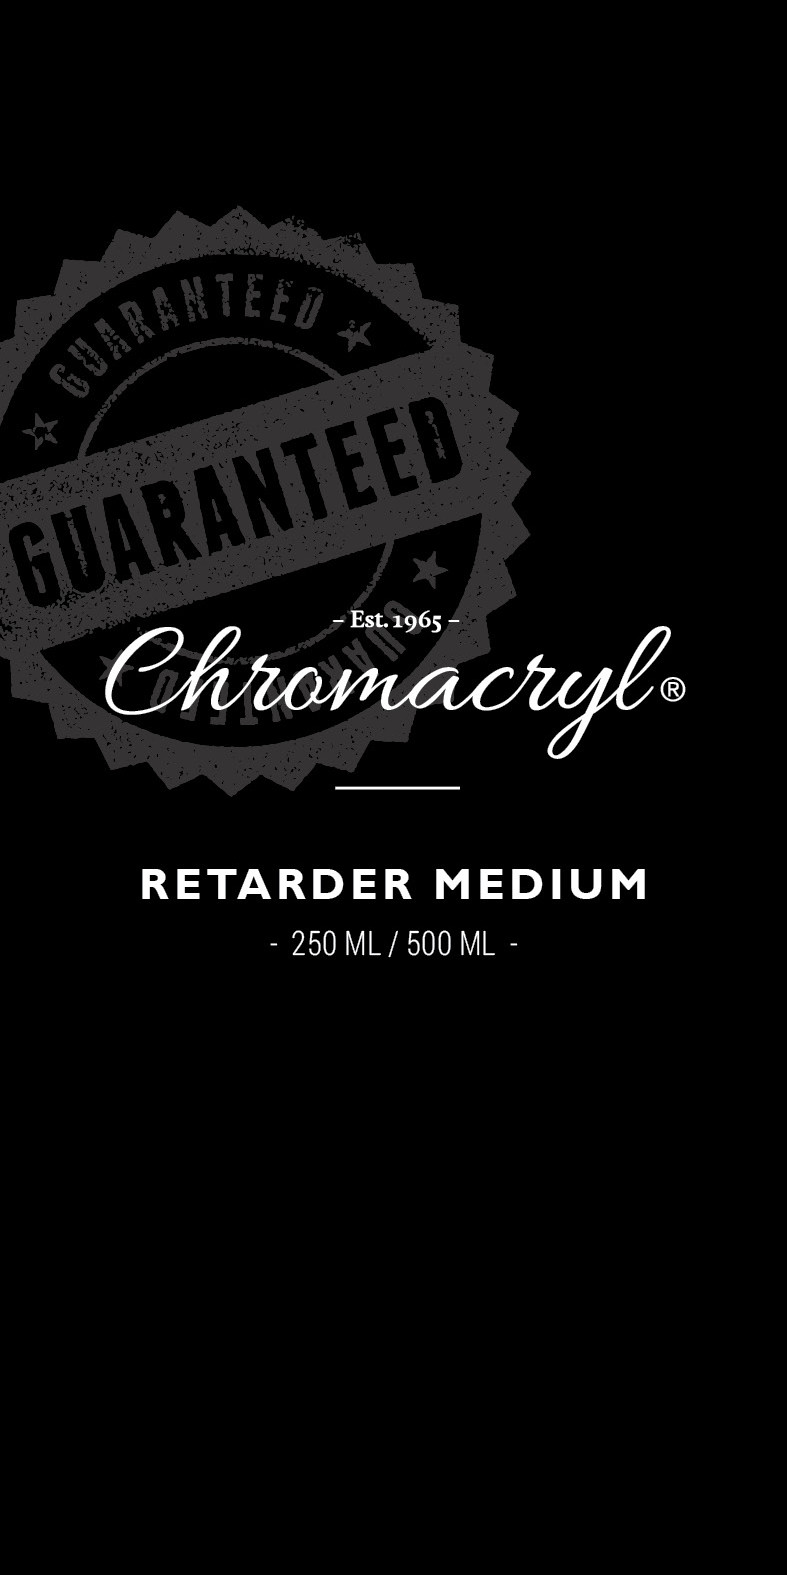 Chromacryl: Retarder Medium